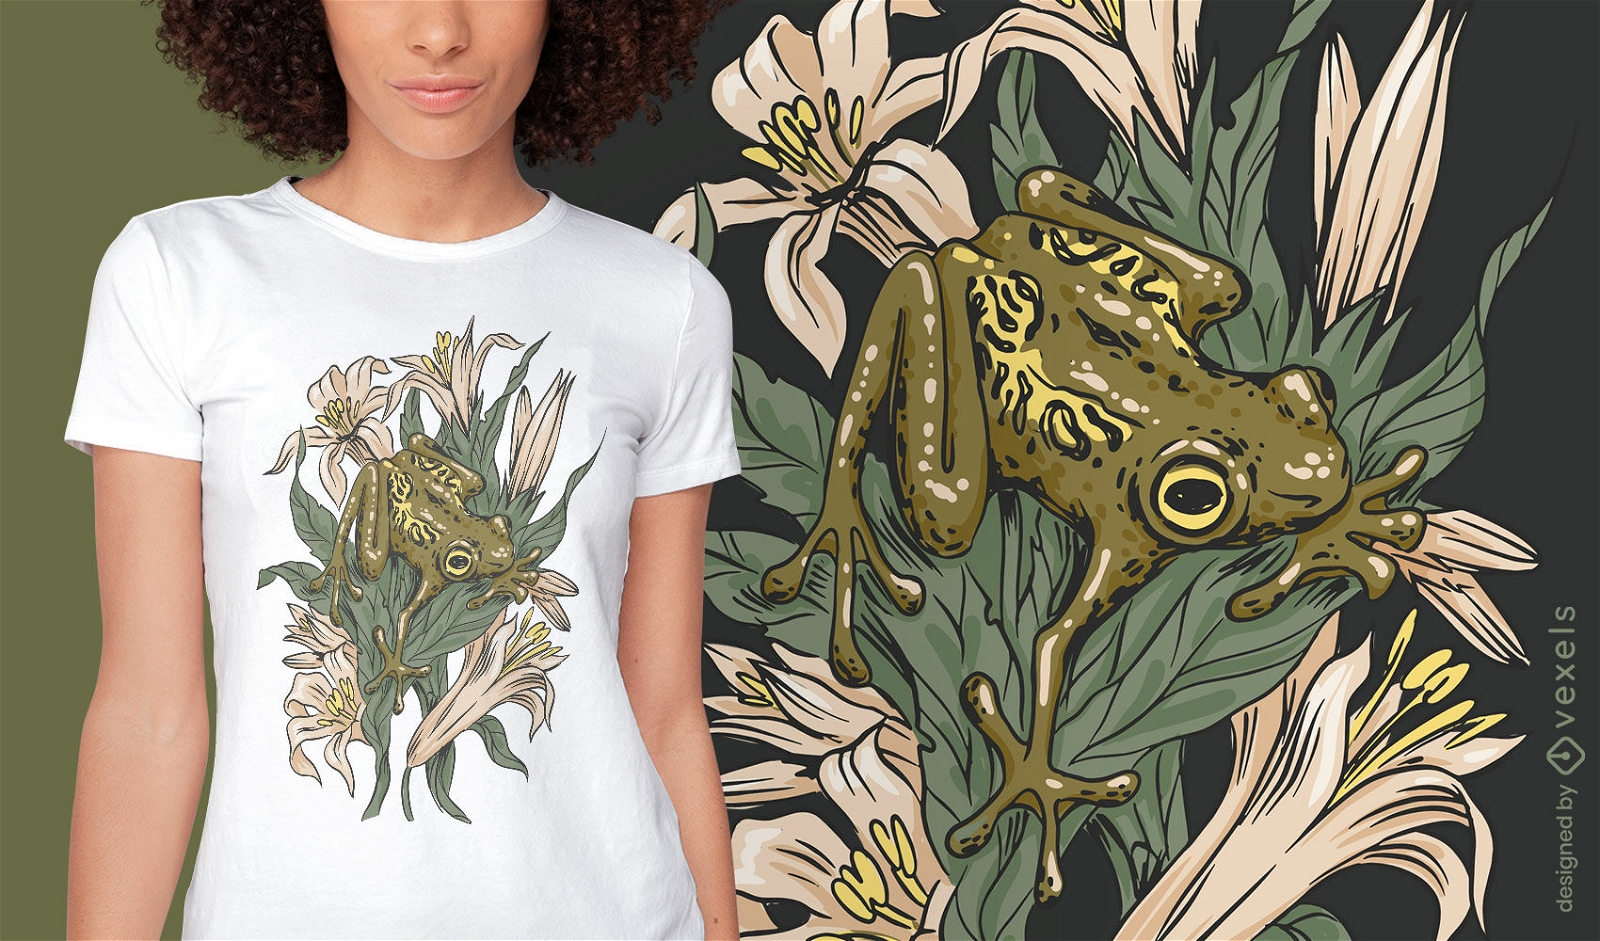 Forest frog nature t-shirt design